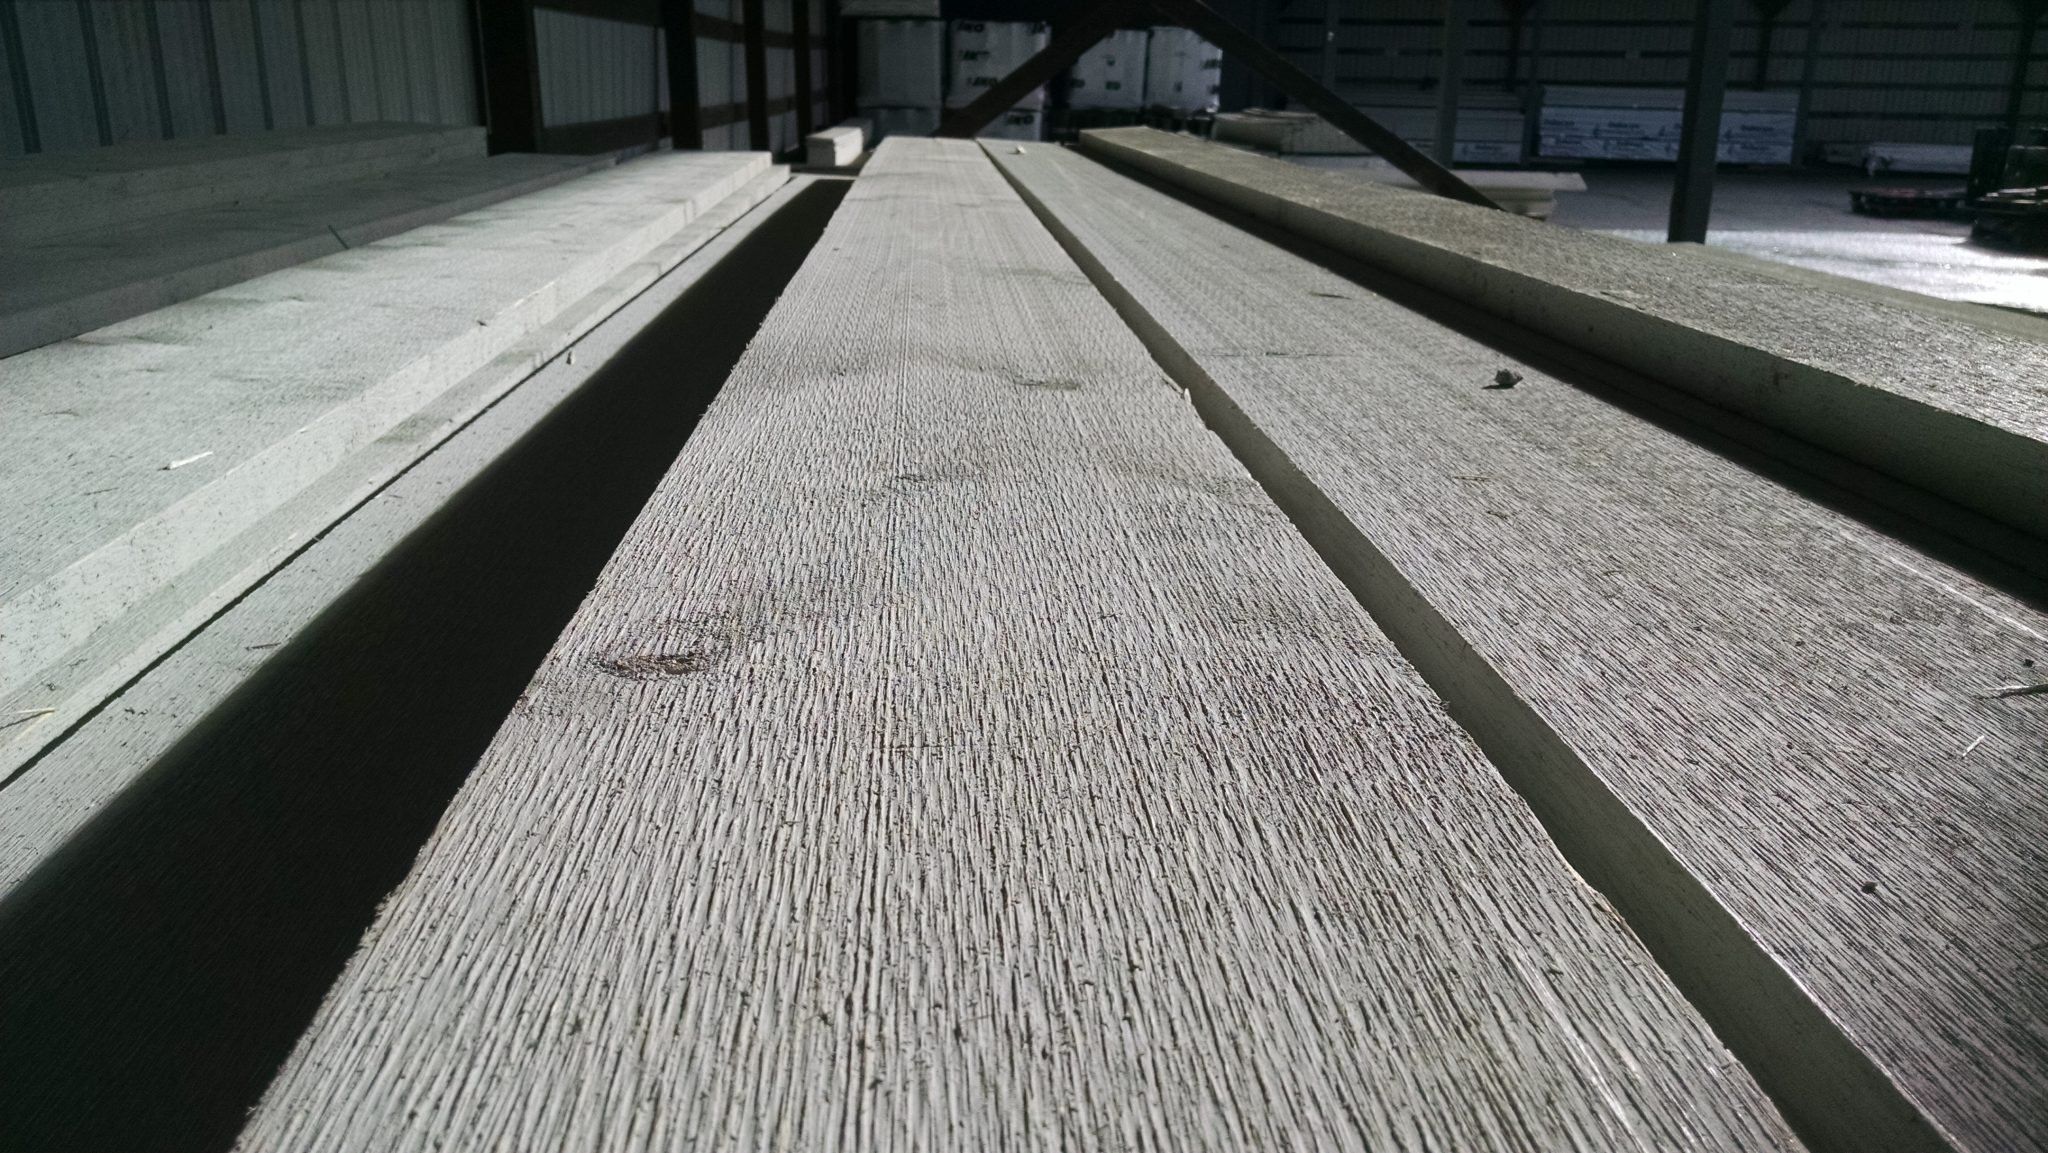 Fascia Board Lumber Supply & Chilliwack Building Supplies 